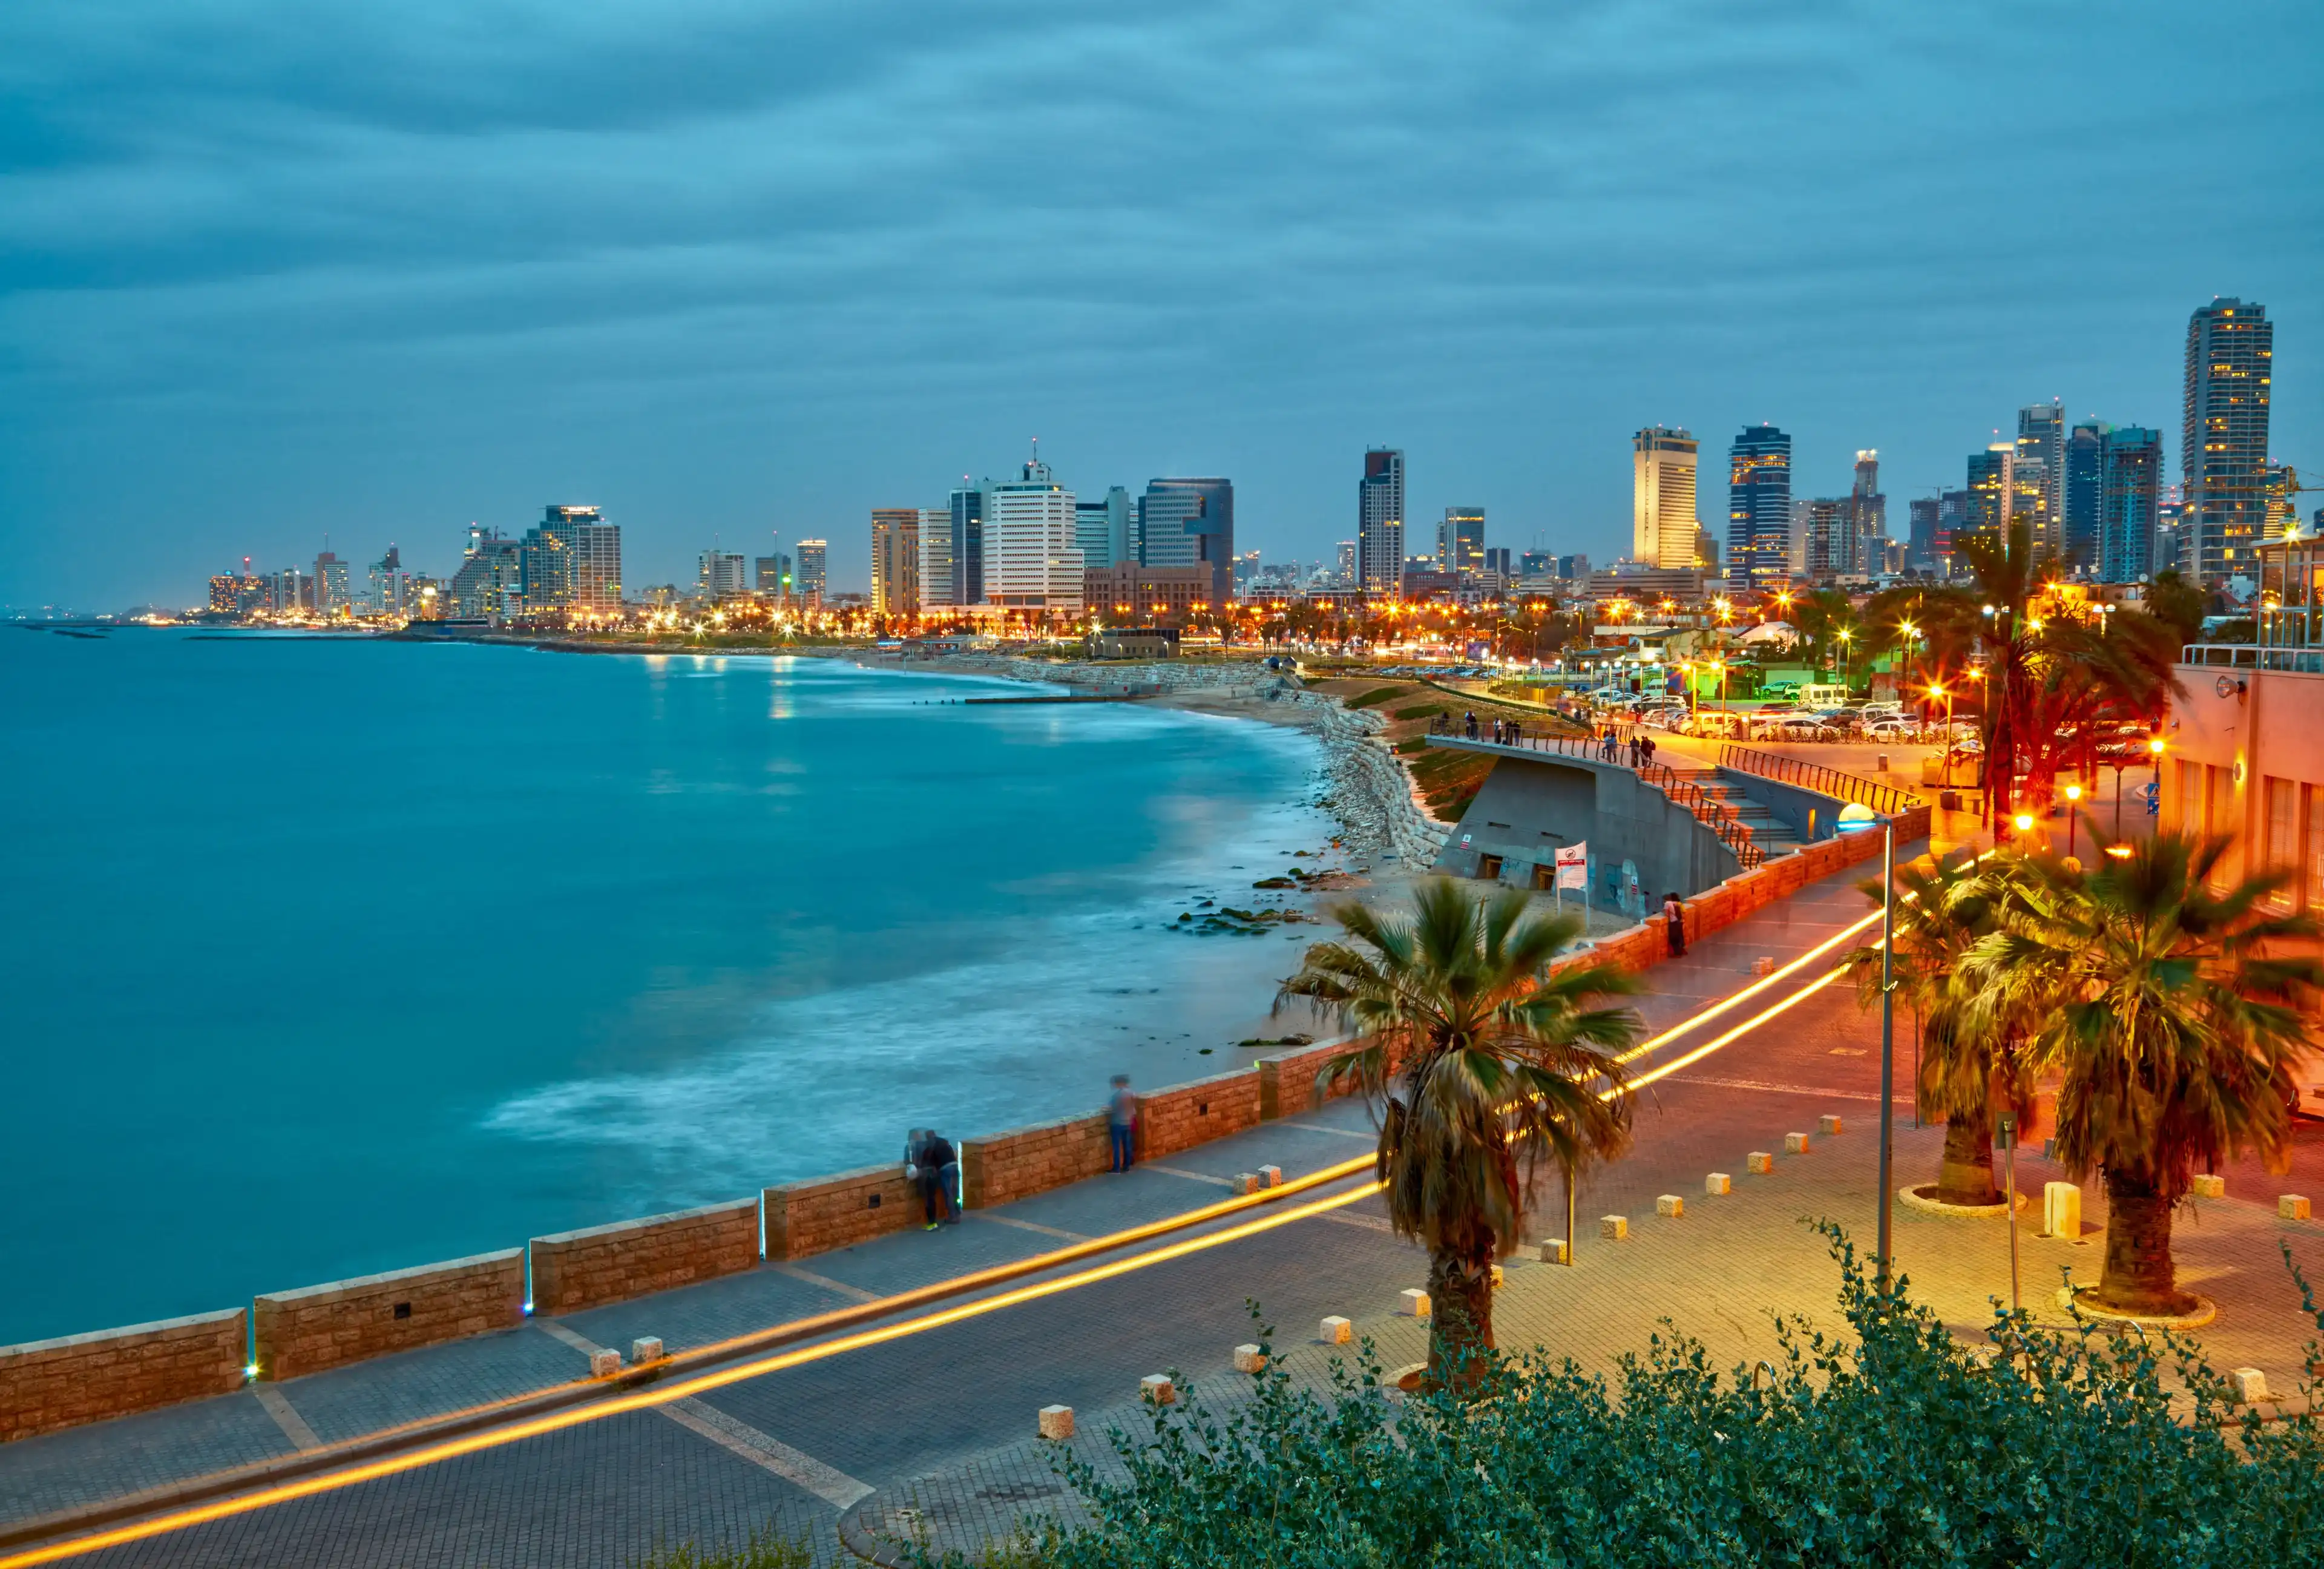 Best Tel Aviv hotels. Cheap hotels in Tel Aviv, Israel